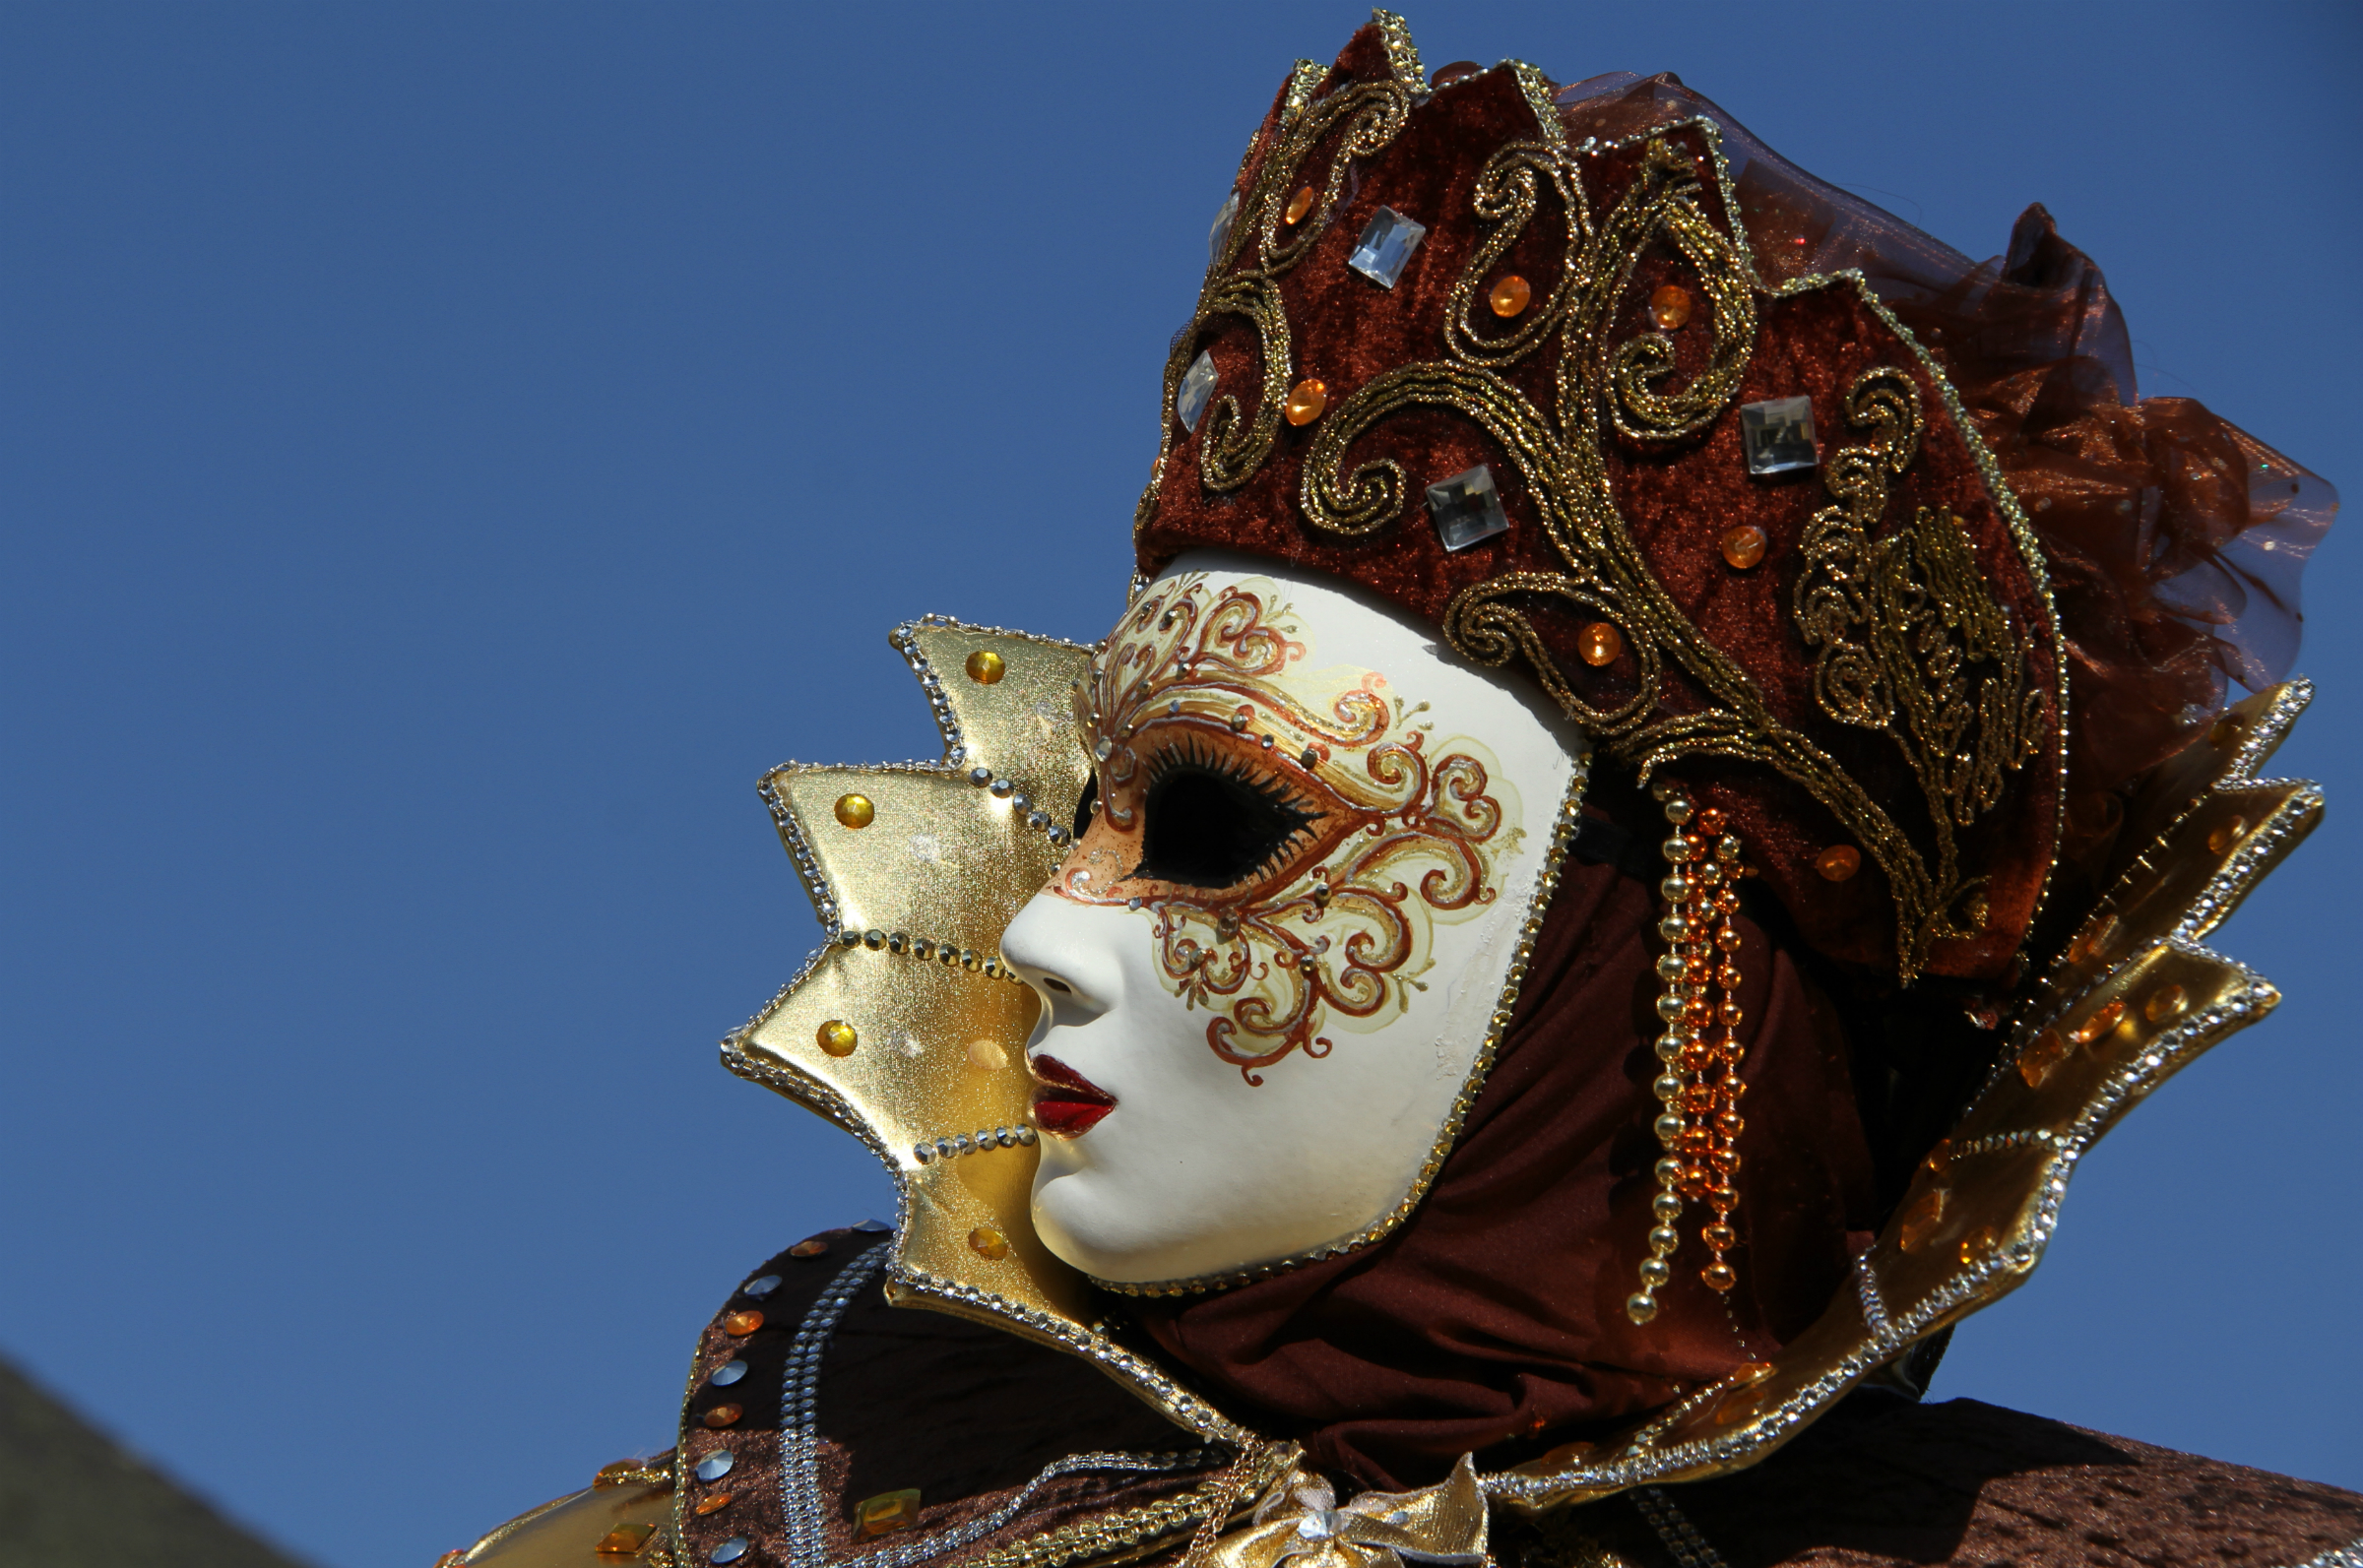 Театр маска бовари. Маска венецианская. Венецианские маскарадные маски. Маски венецианские карнавальные. Венецианские театральные маски.